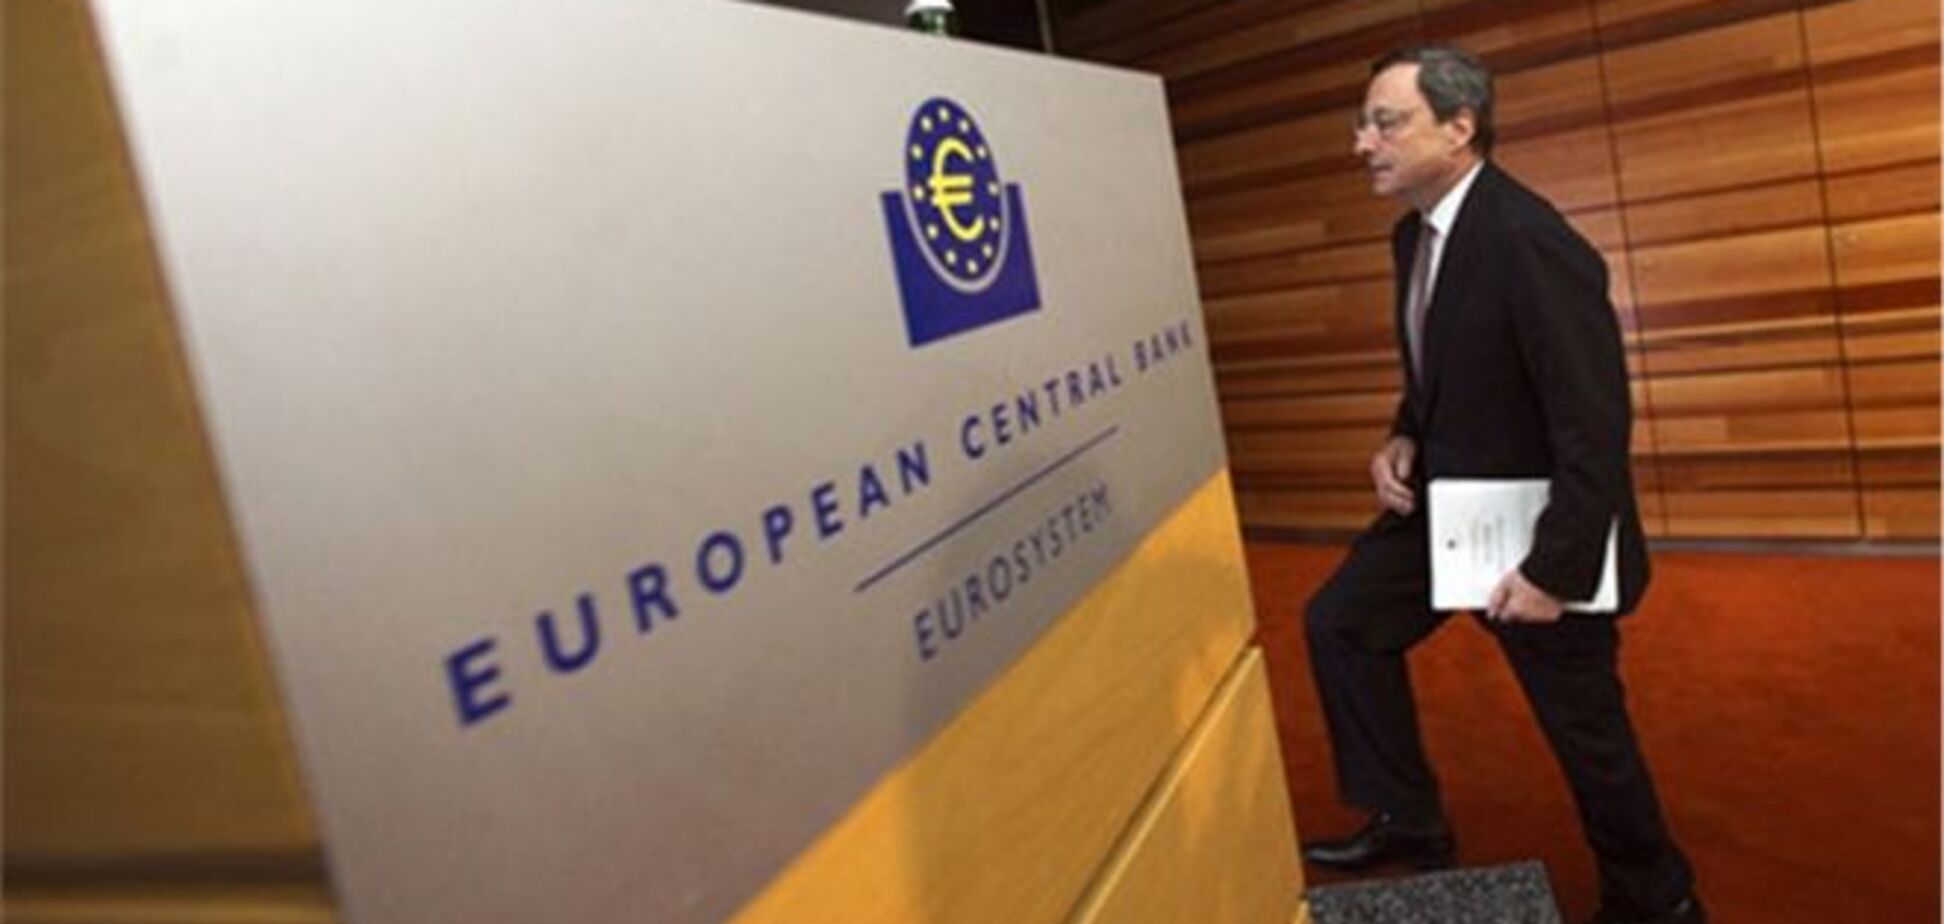 ЕЦБ наделили полномочиями единого банковского регулятора в еврозоне